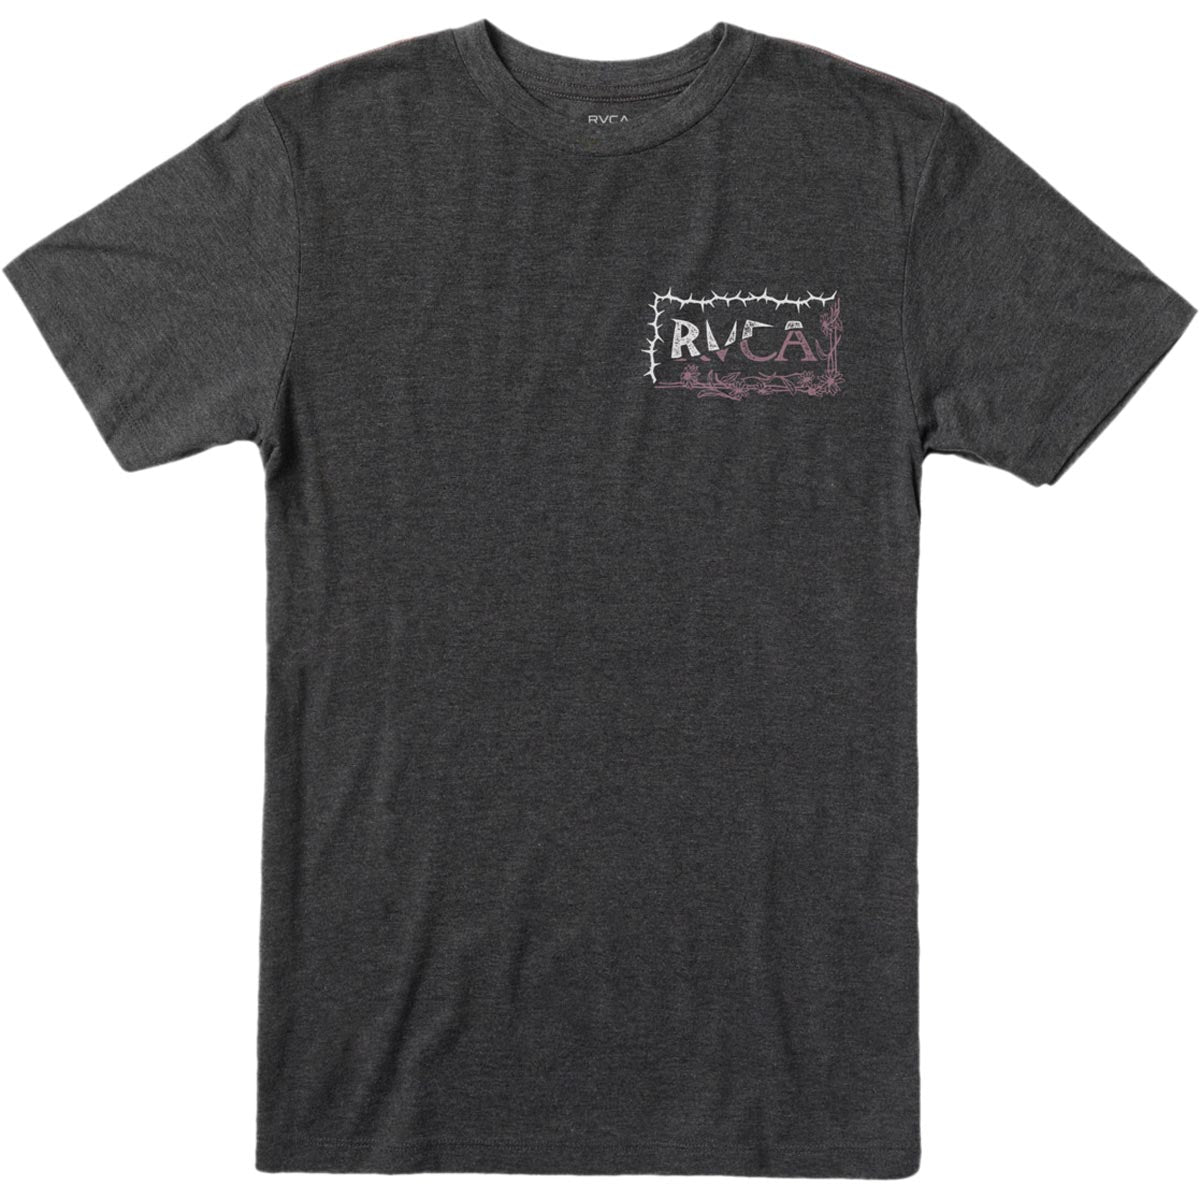 RVCA Sharp Split T-Shirt - Black image 1